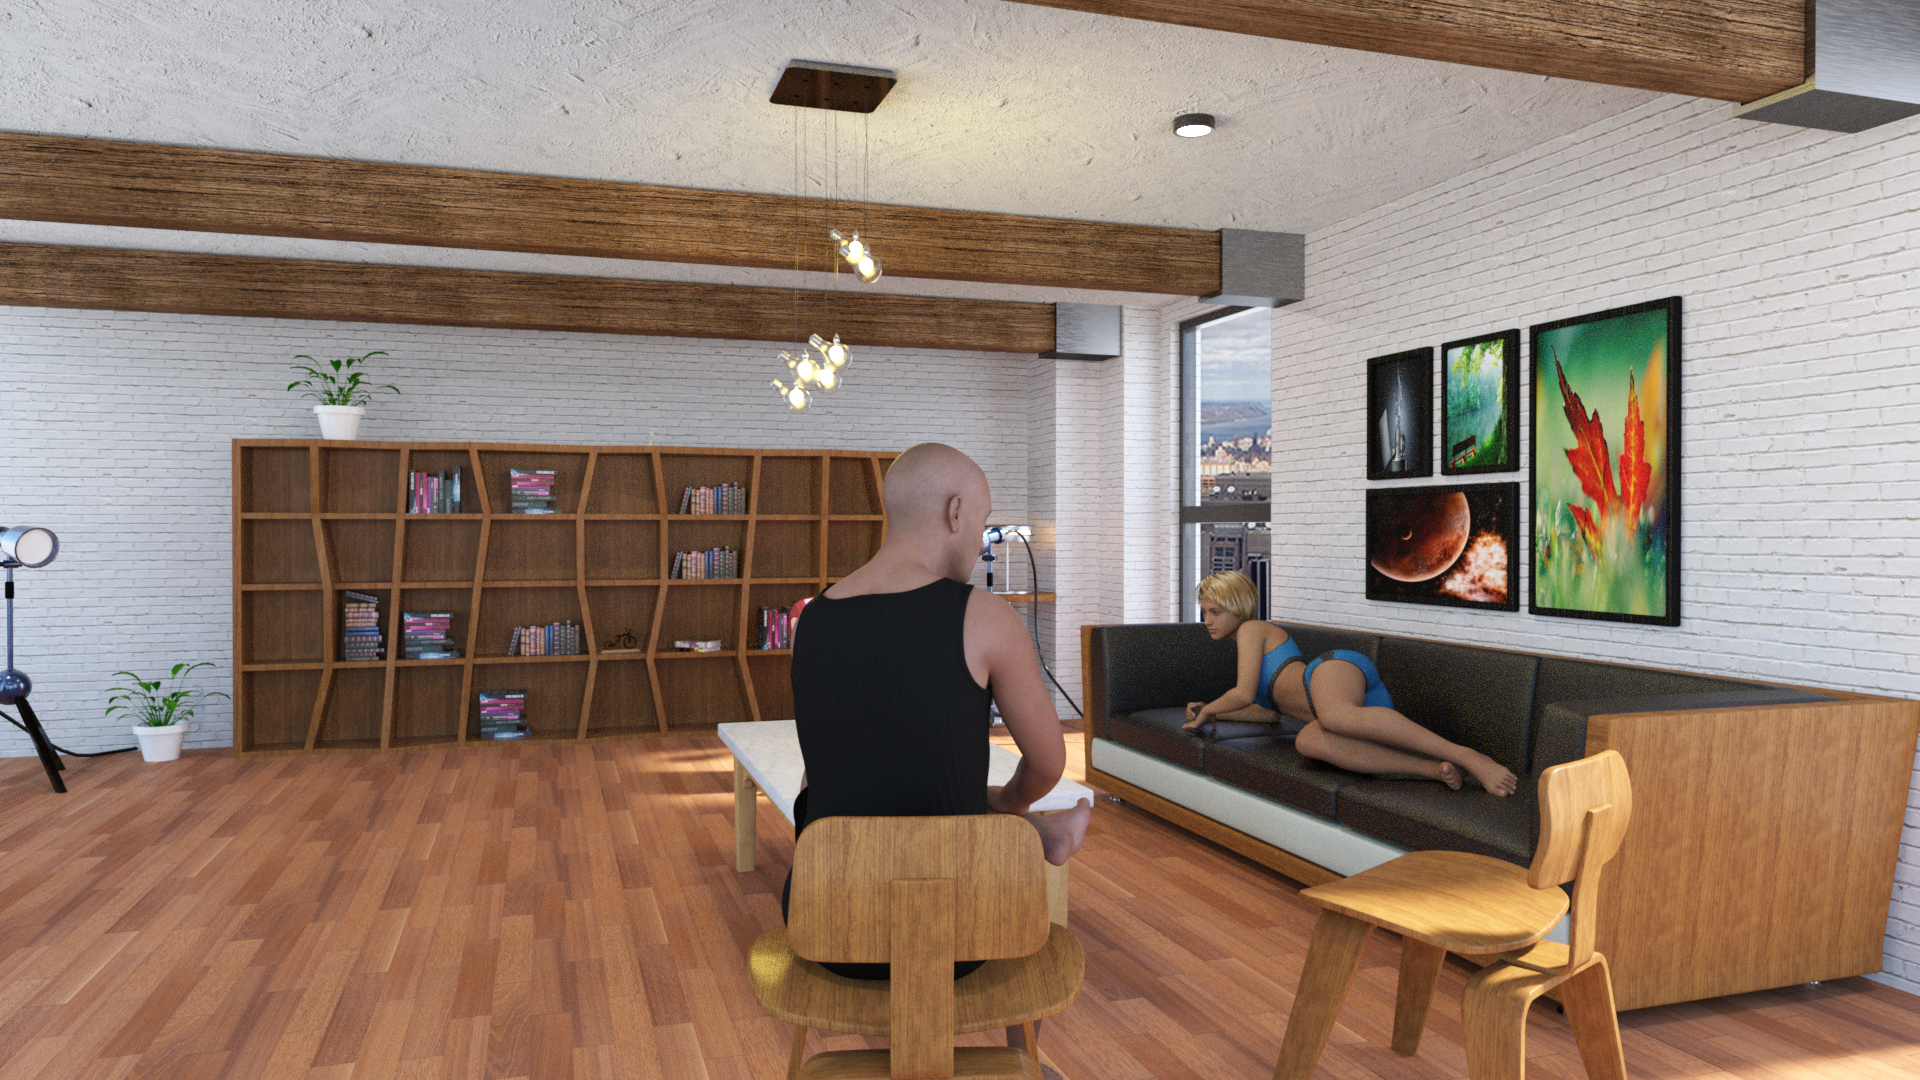 Manhattan Living Room by: Tesla3dCorp, 3D Models by Daz 3D